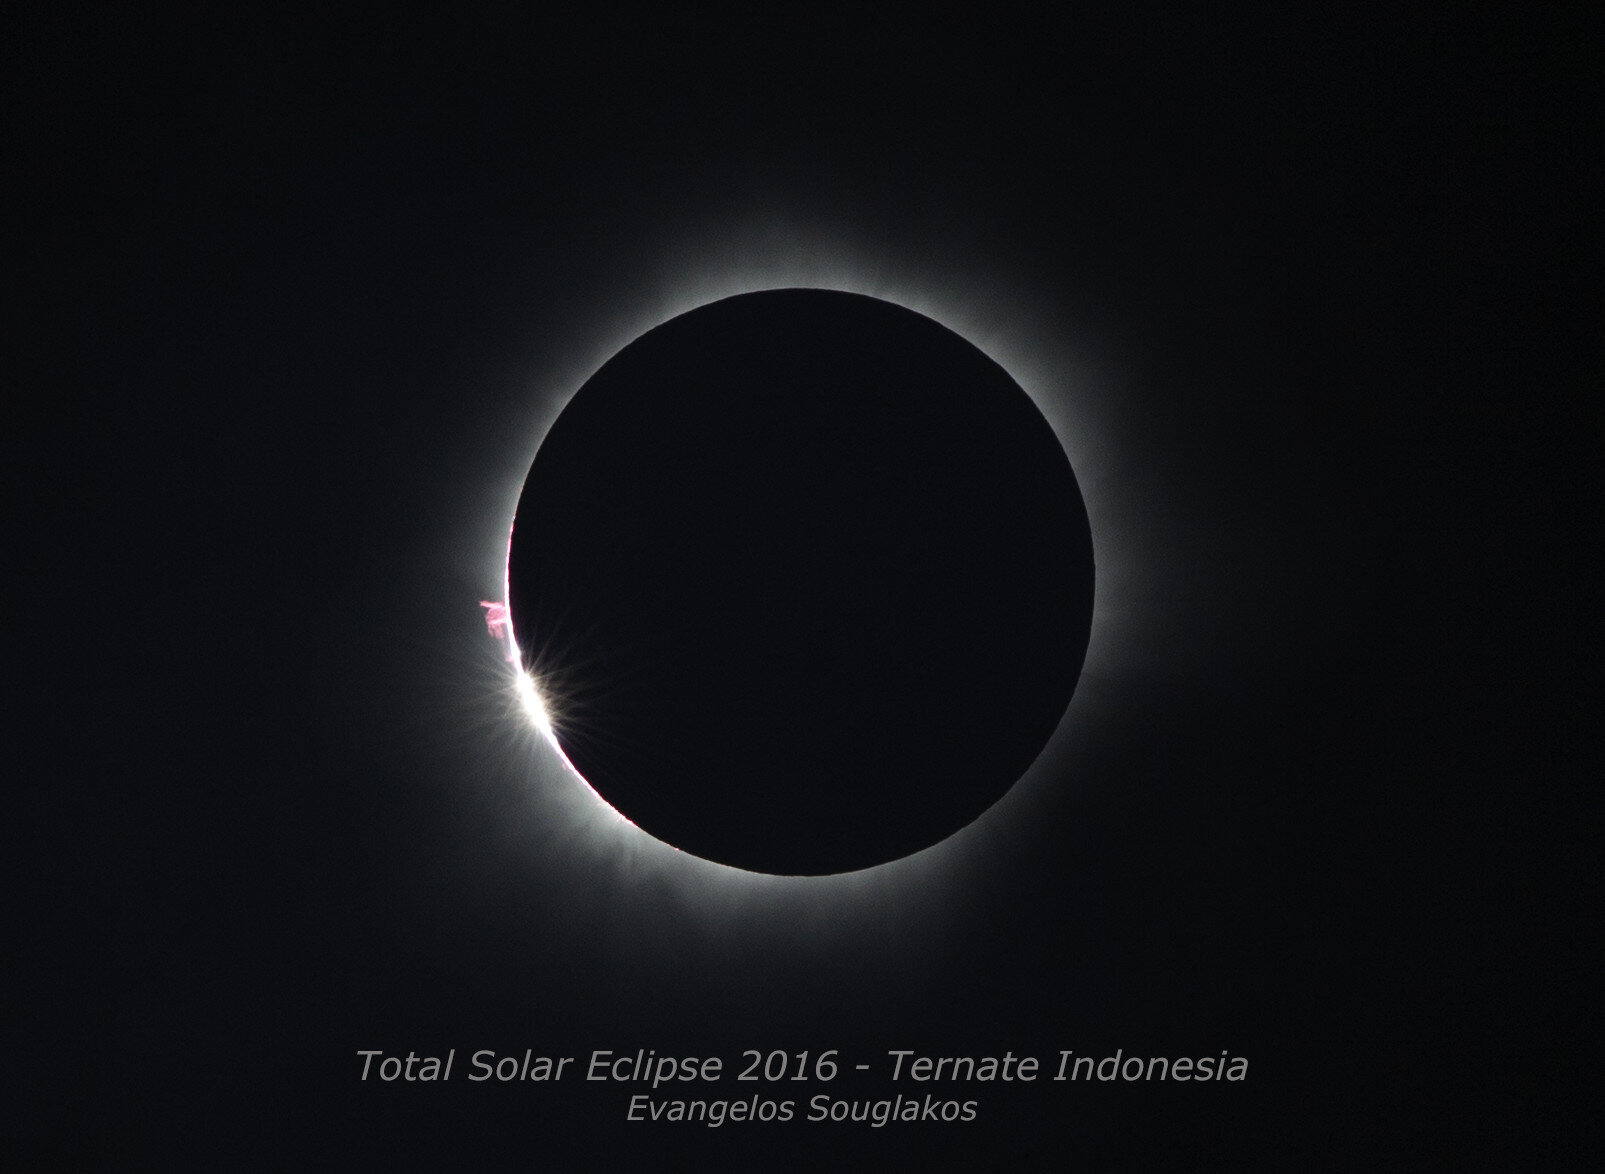 Total Solar Eclipse 2016 - Ternate Indonesia